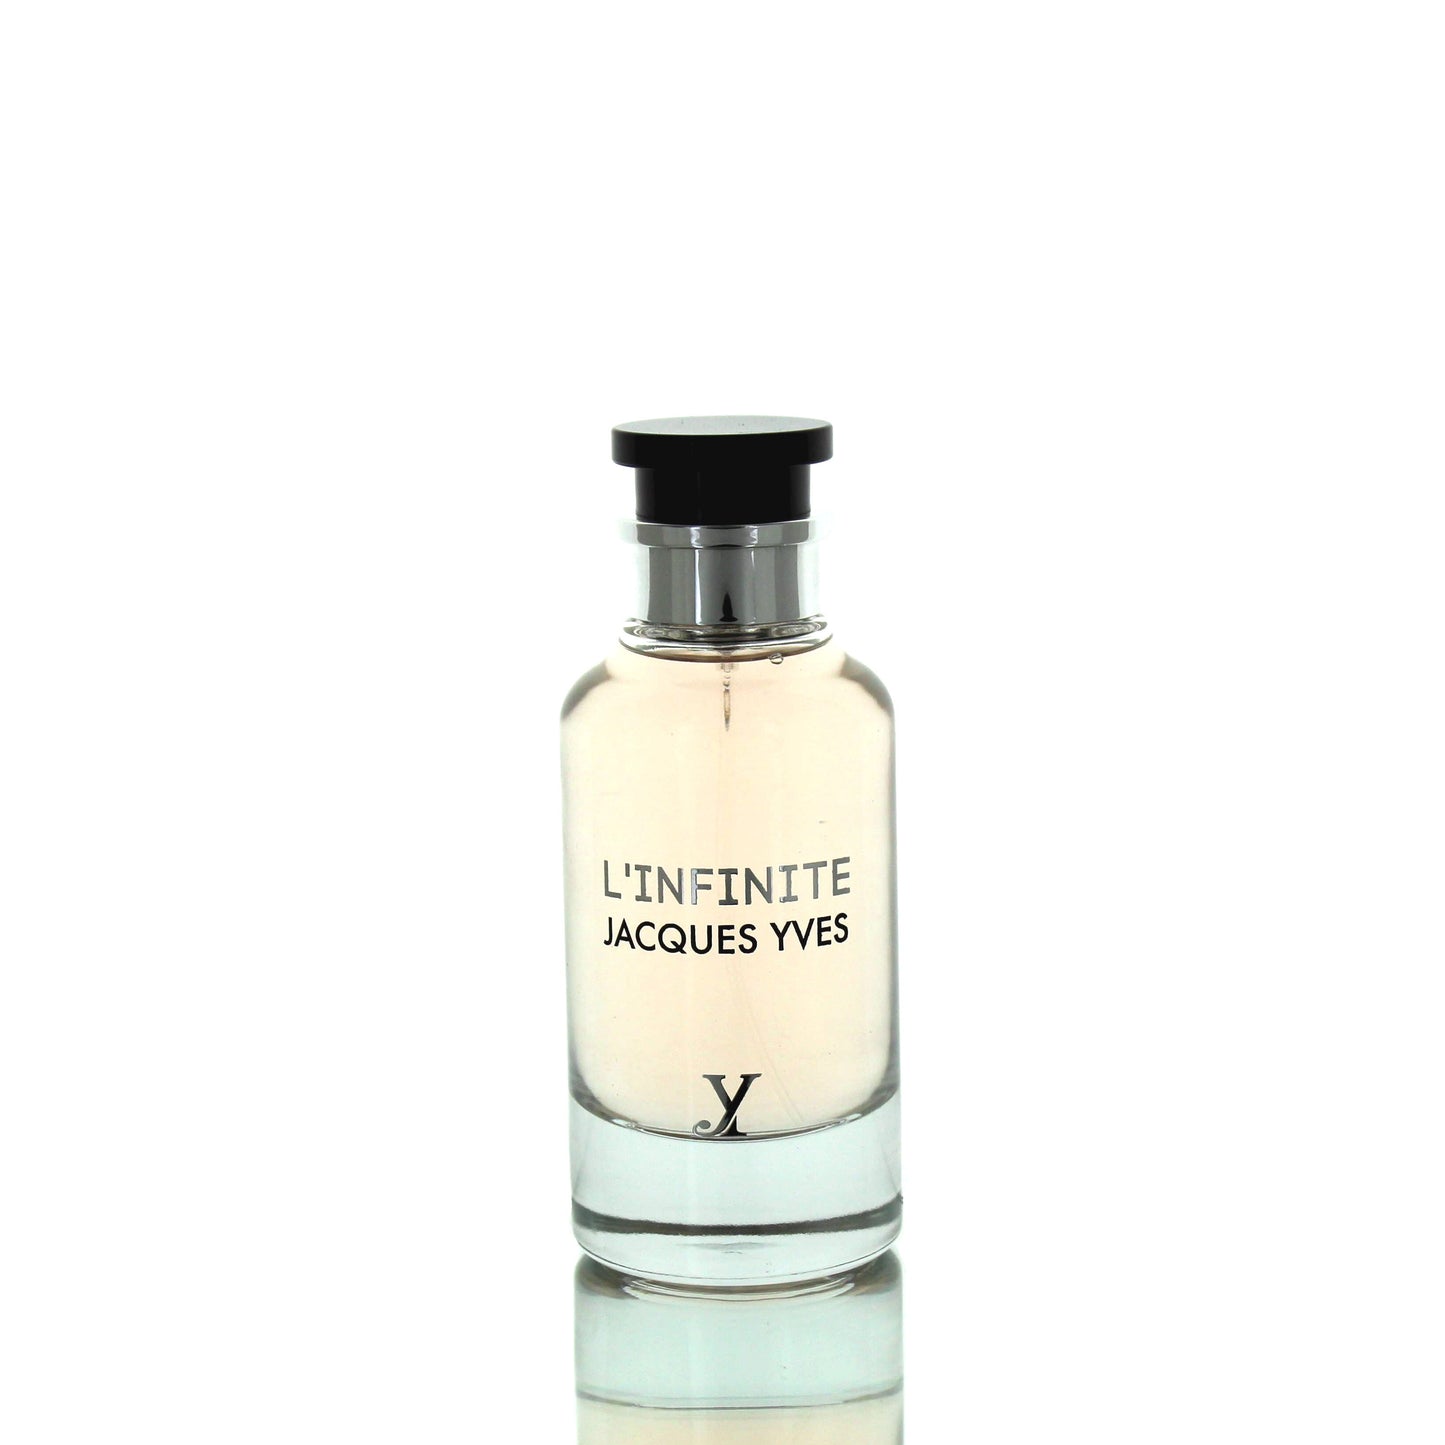 Fragrance World L'infinite Jacques Yves